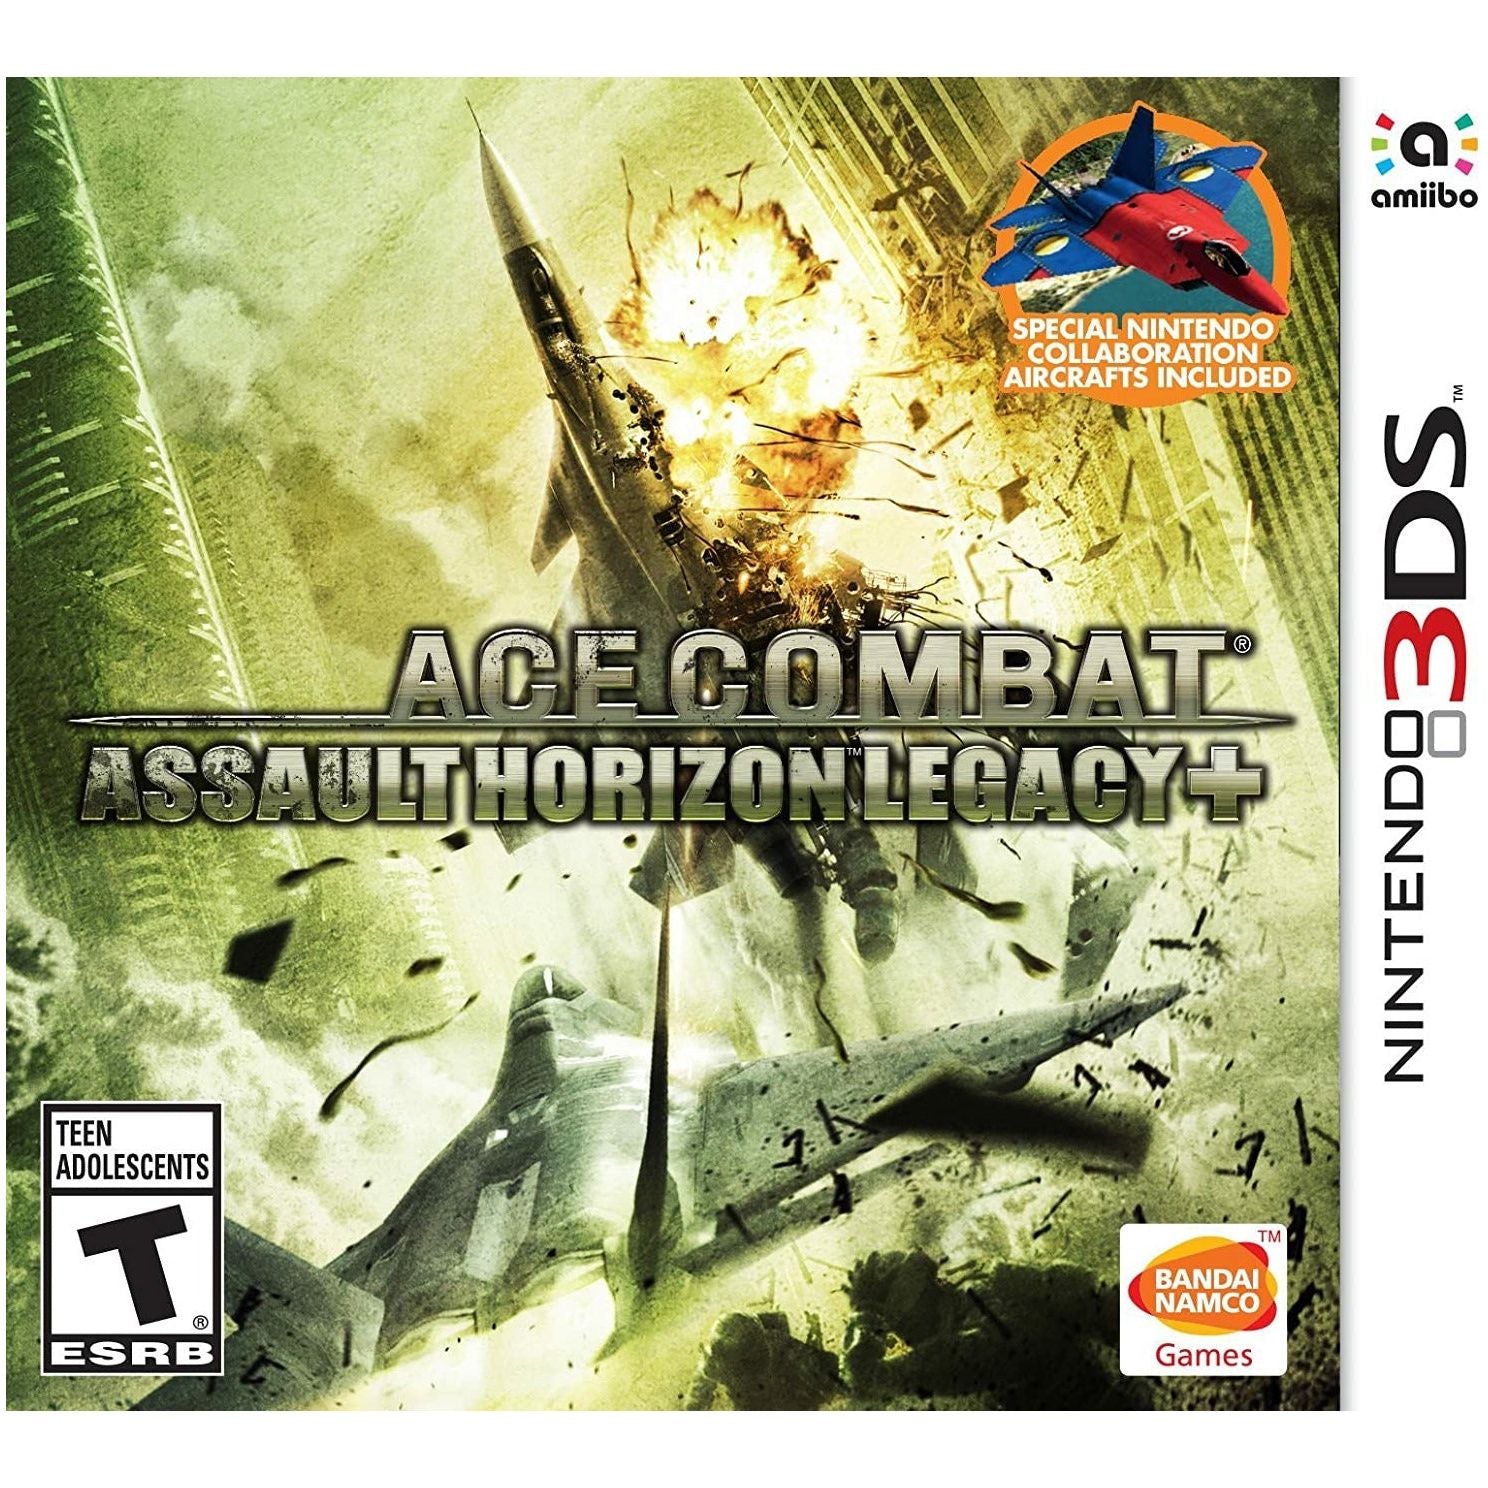 3DS - Ace Combat Assault Horizon Legacy (In Case)